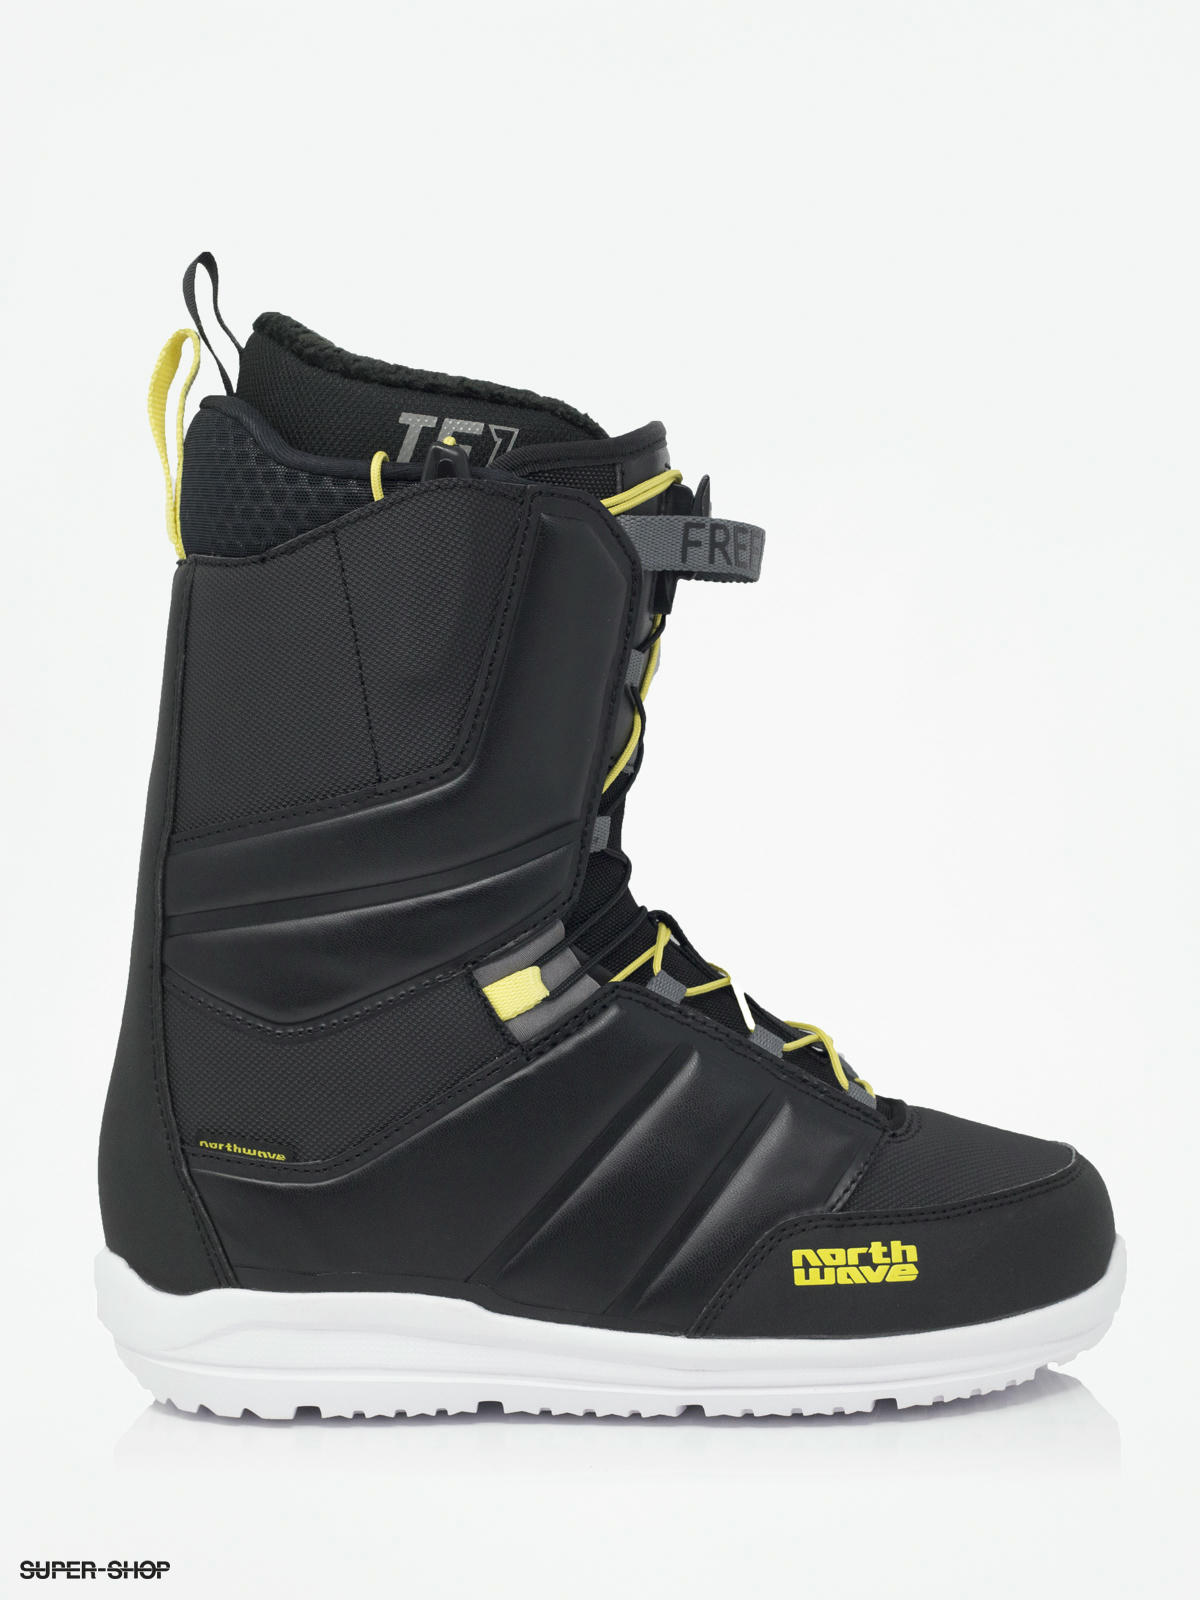 northwave freedom sl snowboard boots